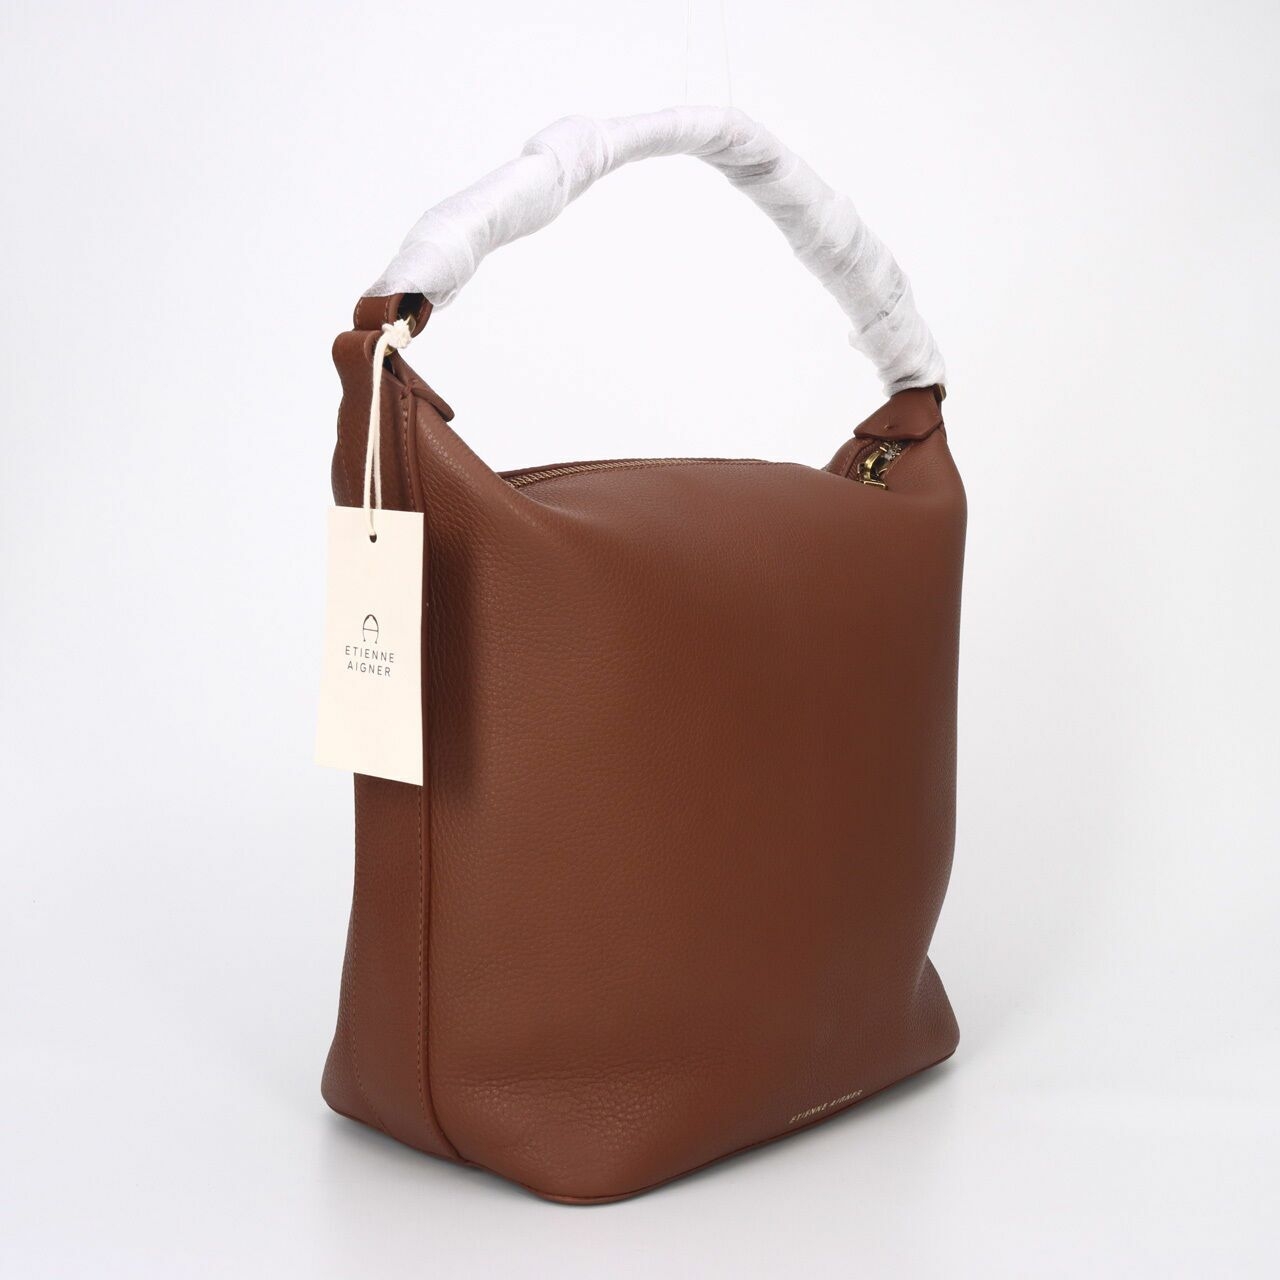 Etienne Aigner Adeline Bucket Brown Luggage Shoulder Bag